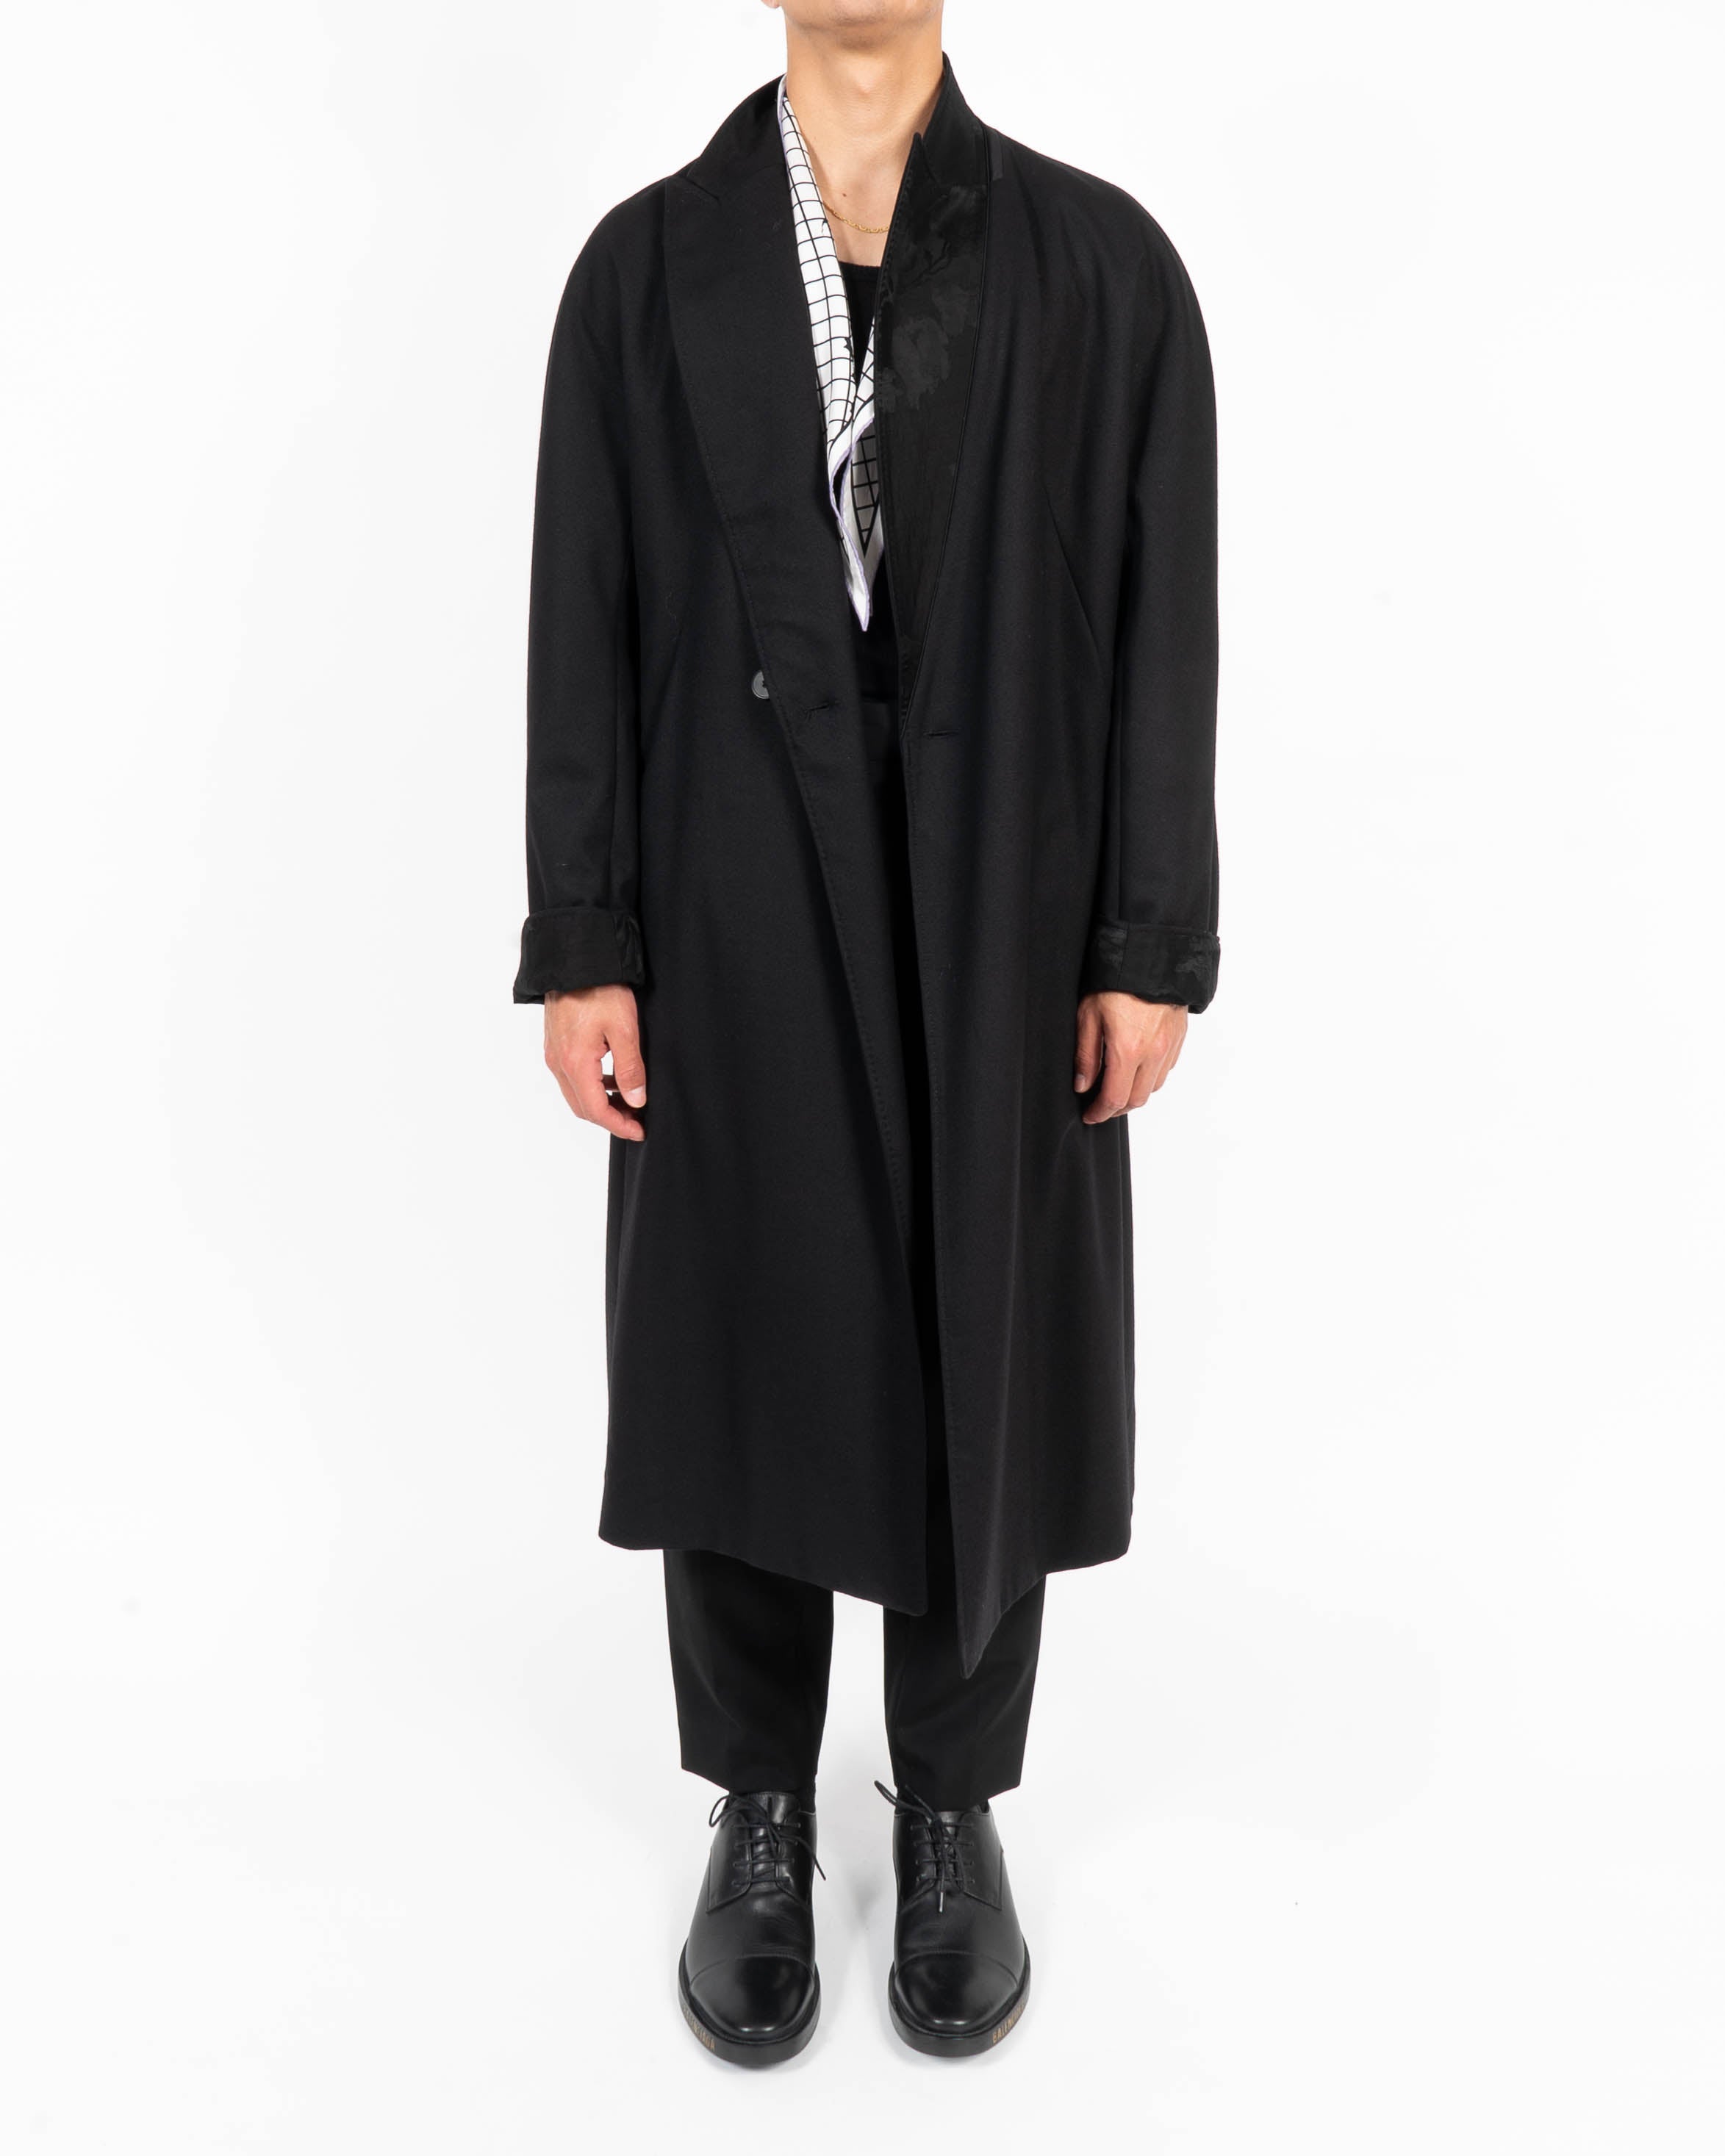 SS21 Kimono Coat in black Viscose